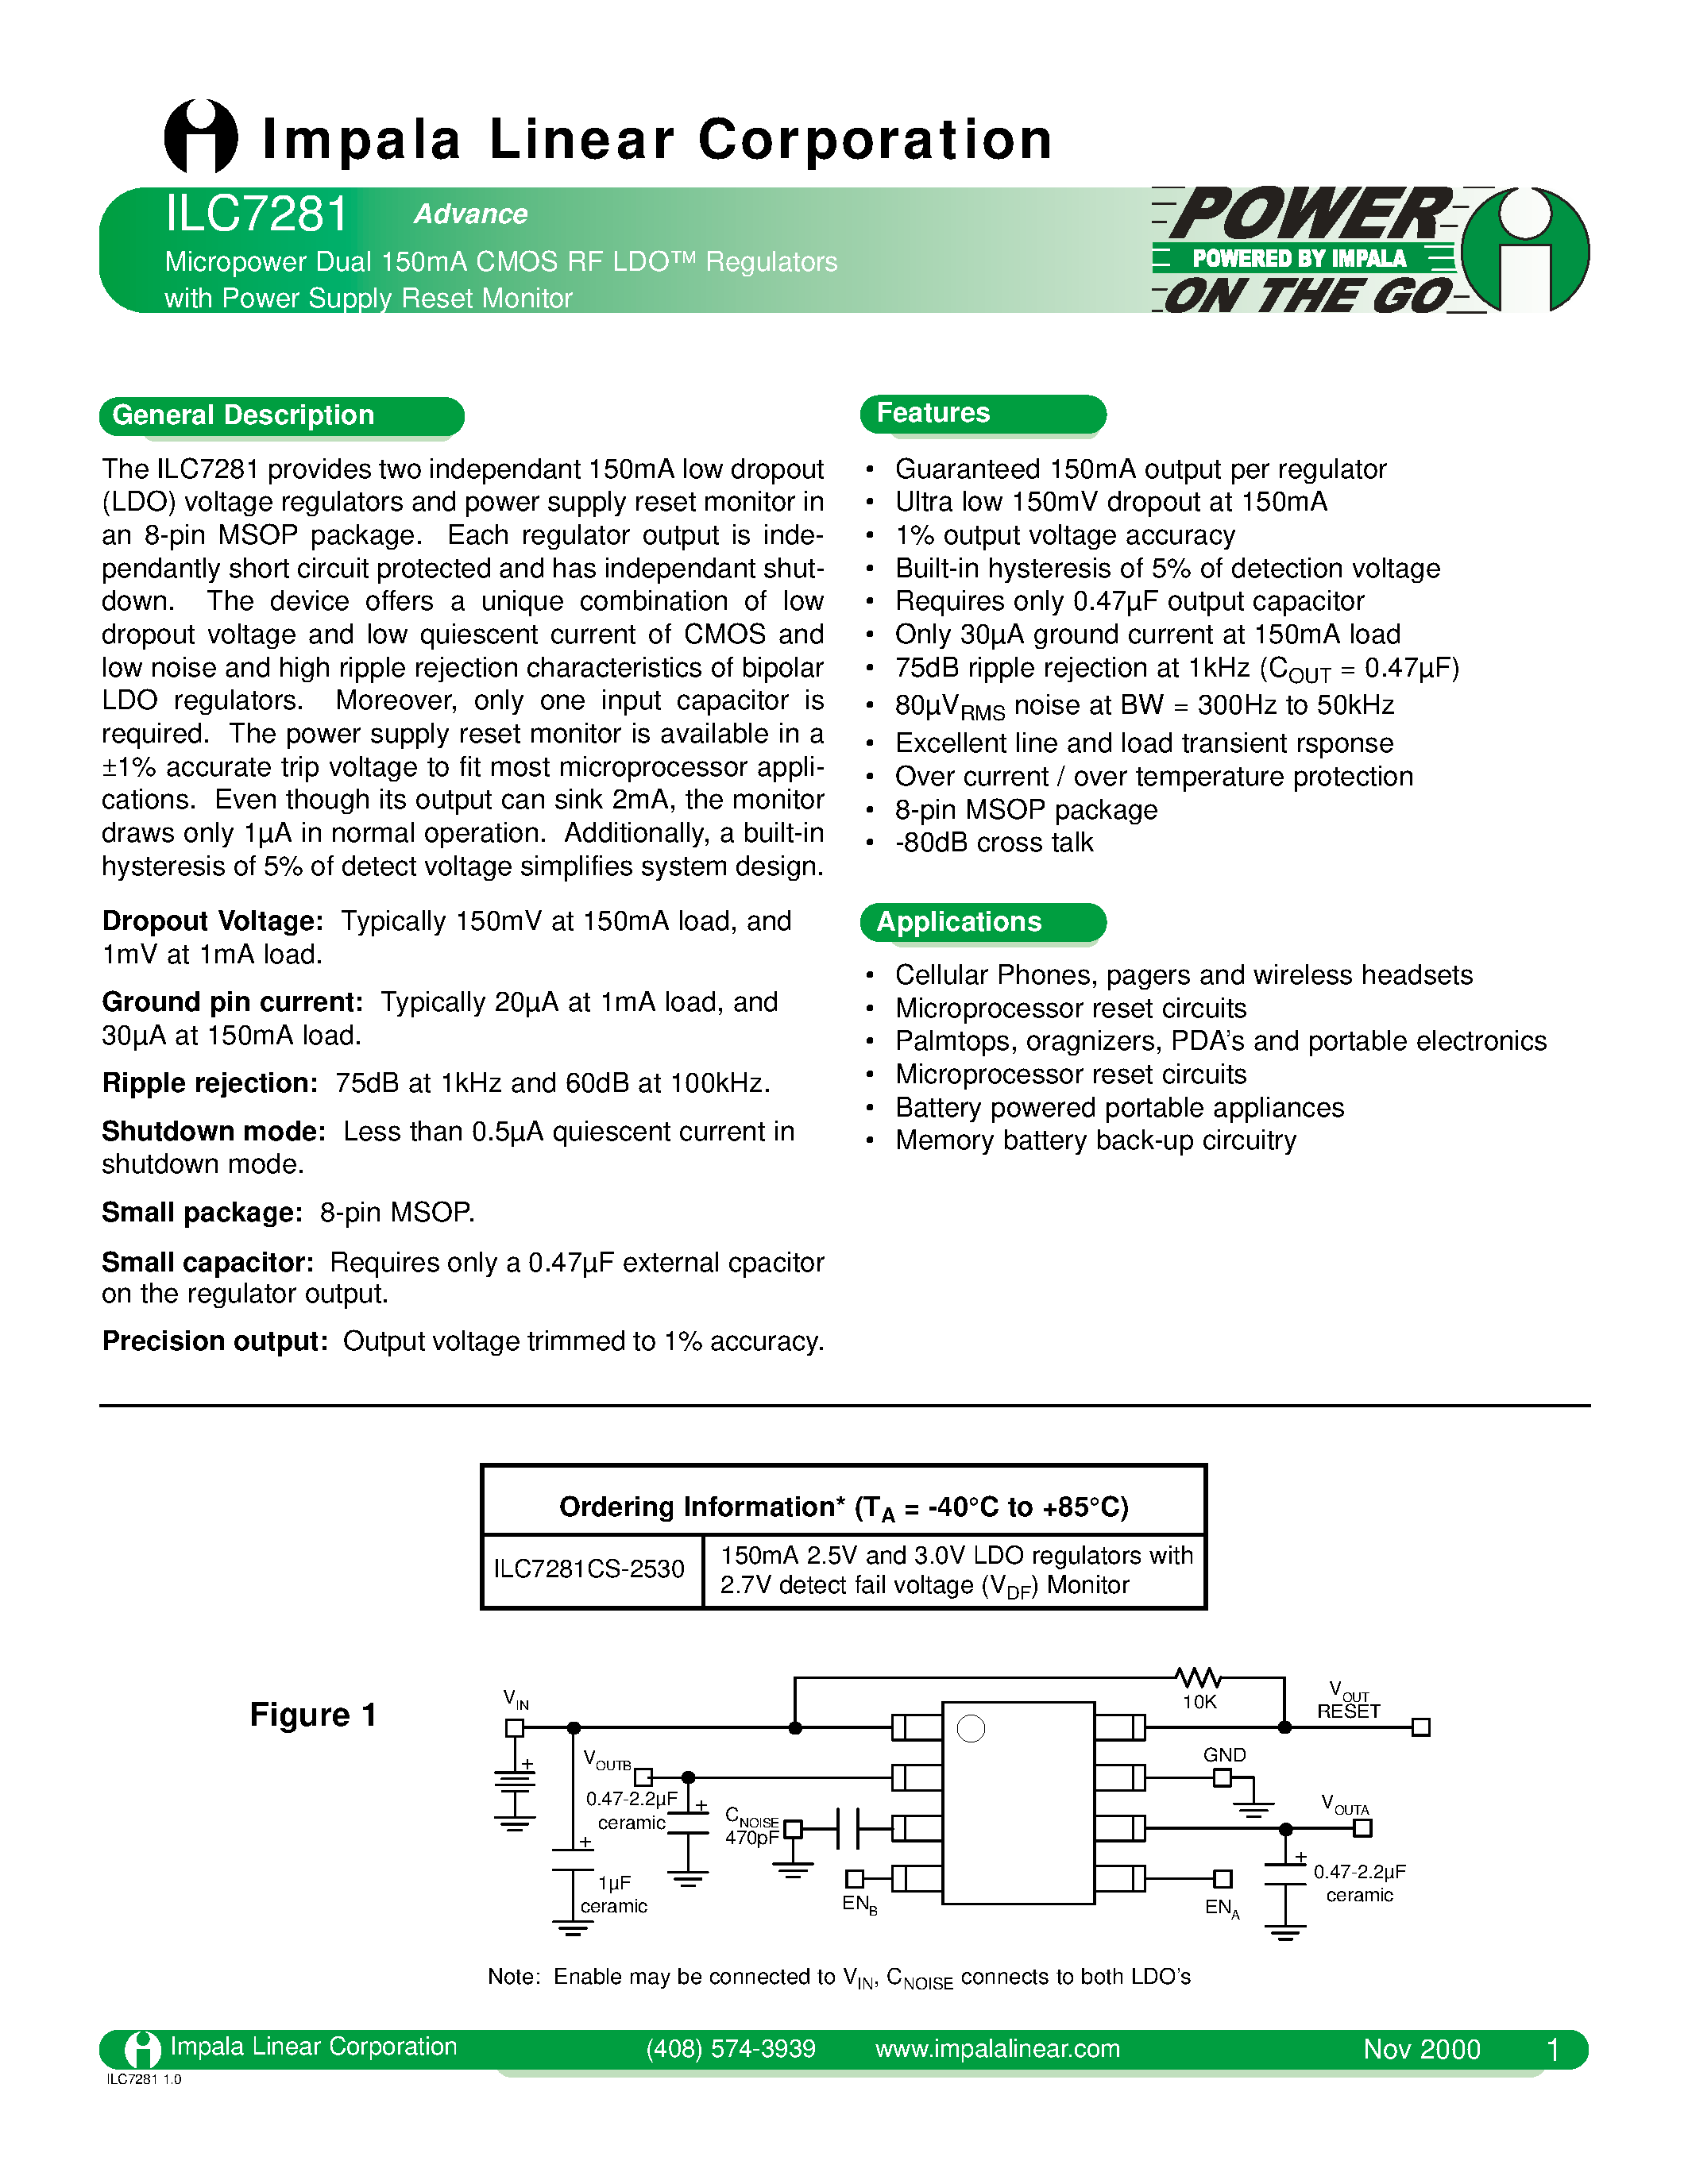 Datasheet ILC7281CS-2530 - MICROPOWER DUAL 150MA CMOS RF LDO REGULATORS WITH POWER SUPPLY RESET MONITOR page 1